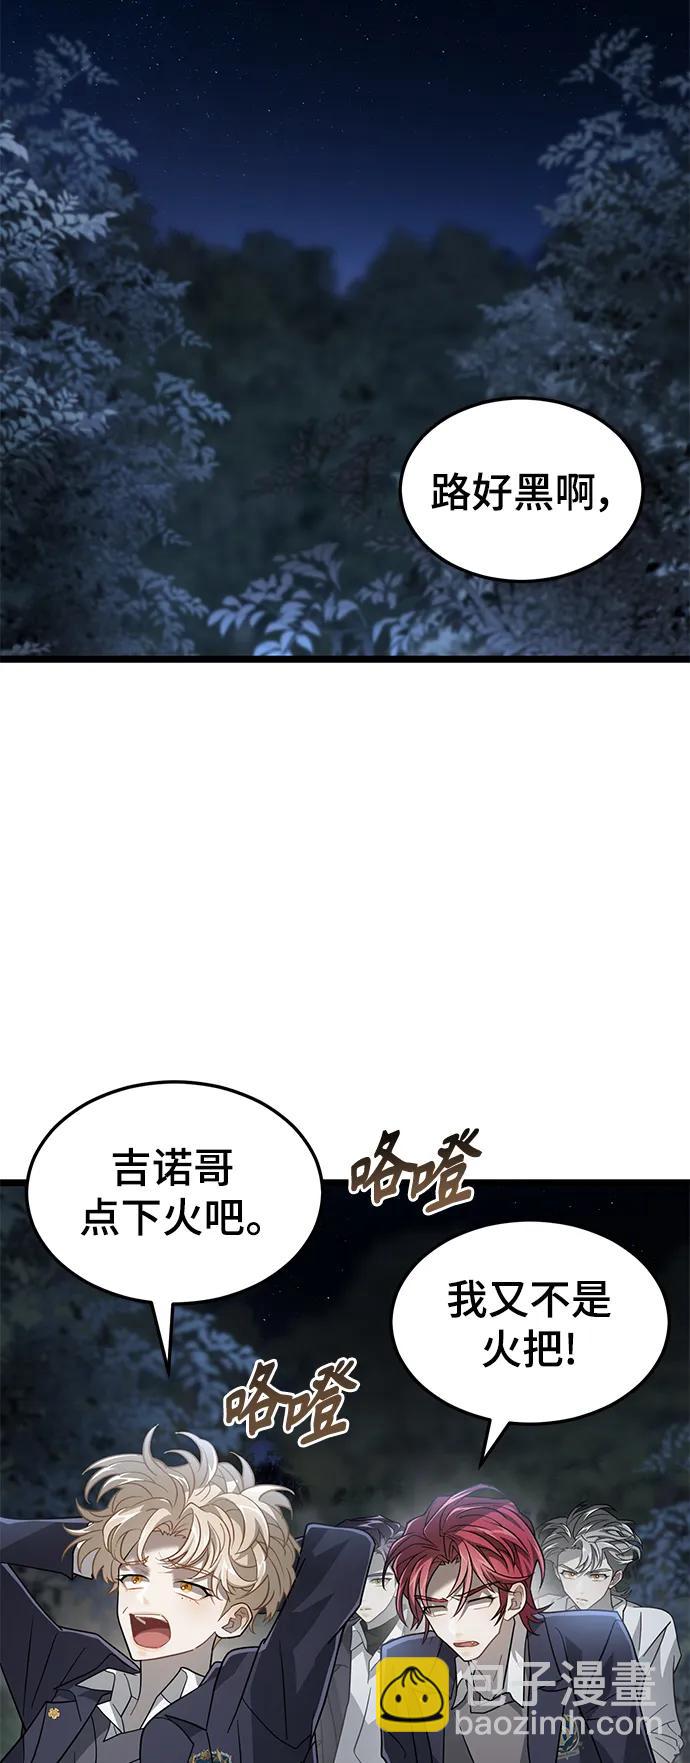 DARK MOON: 月之神壇 - 70. 最終話(2/2) - 3